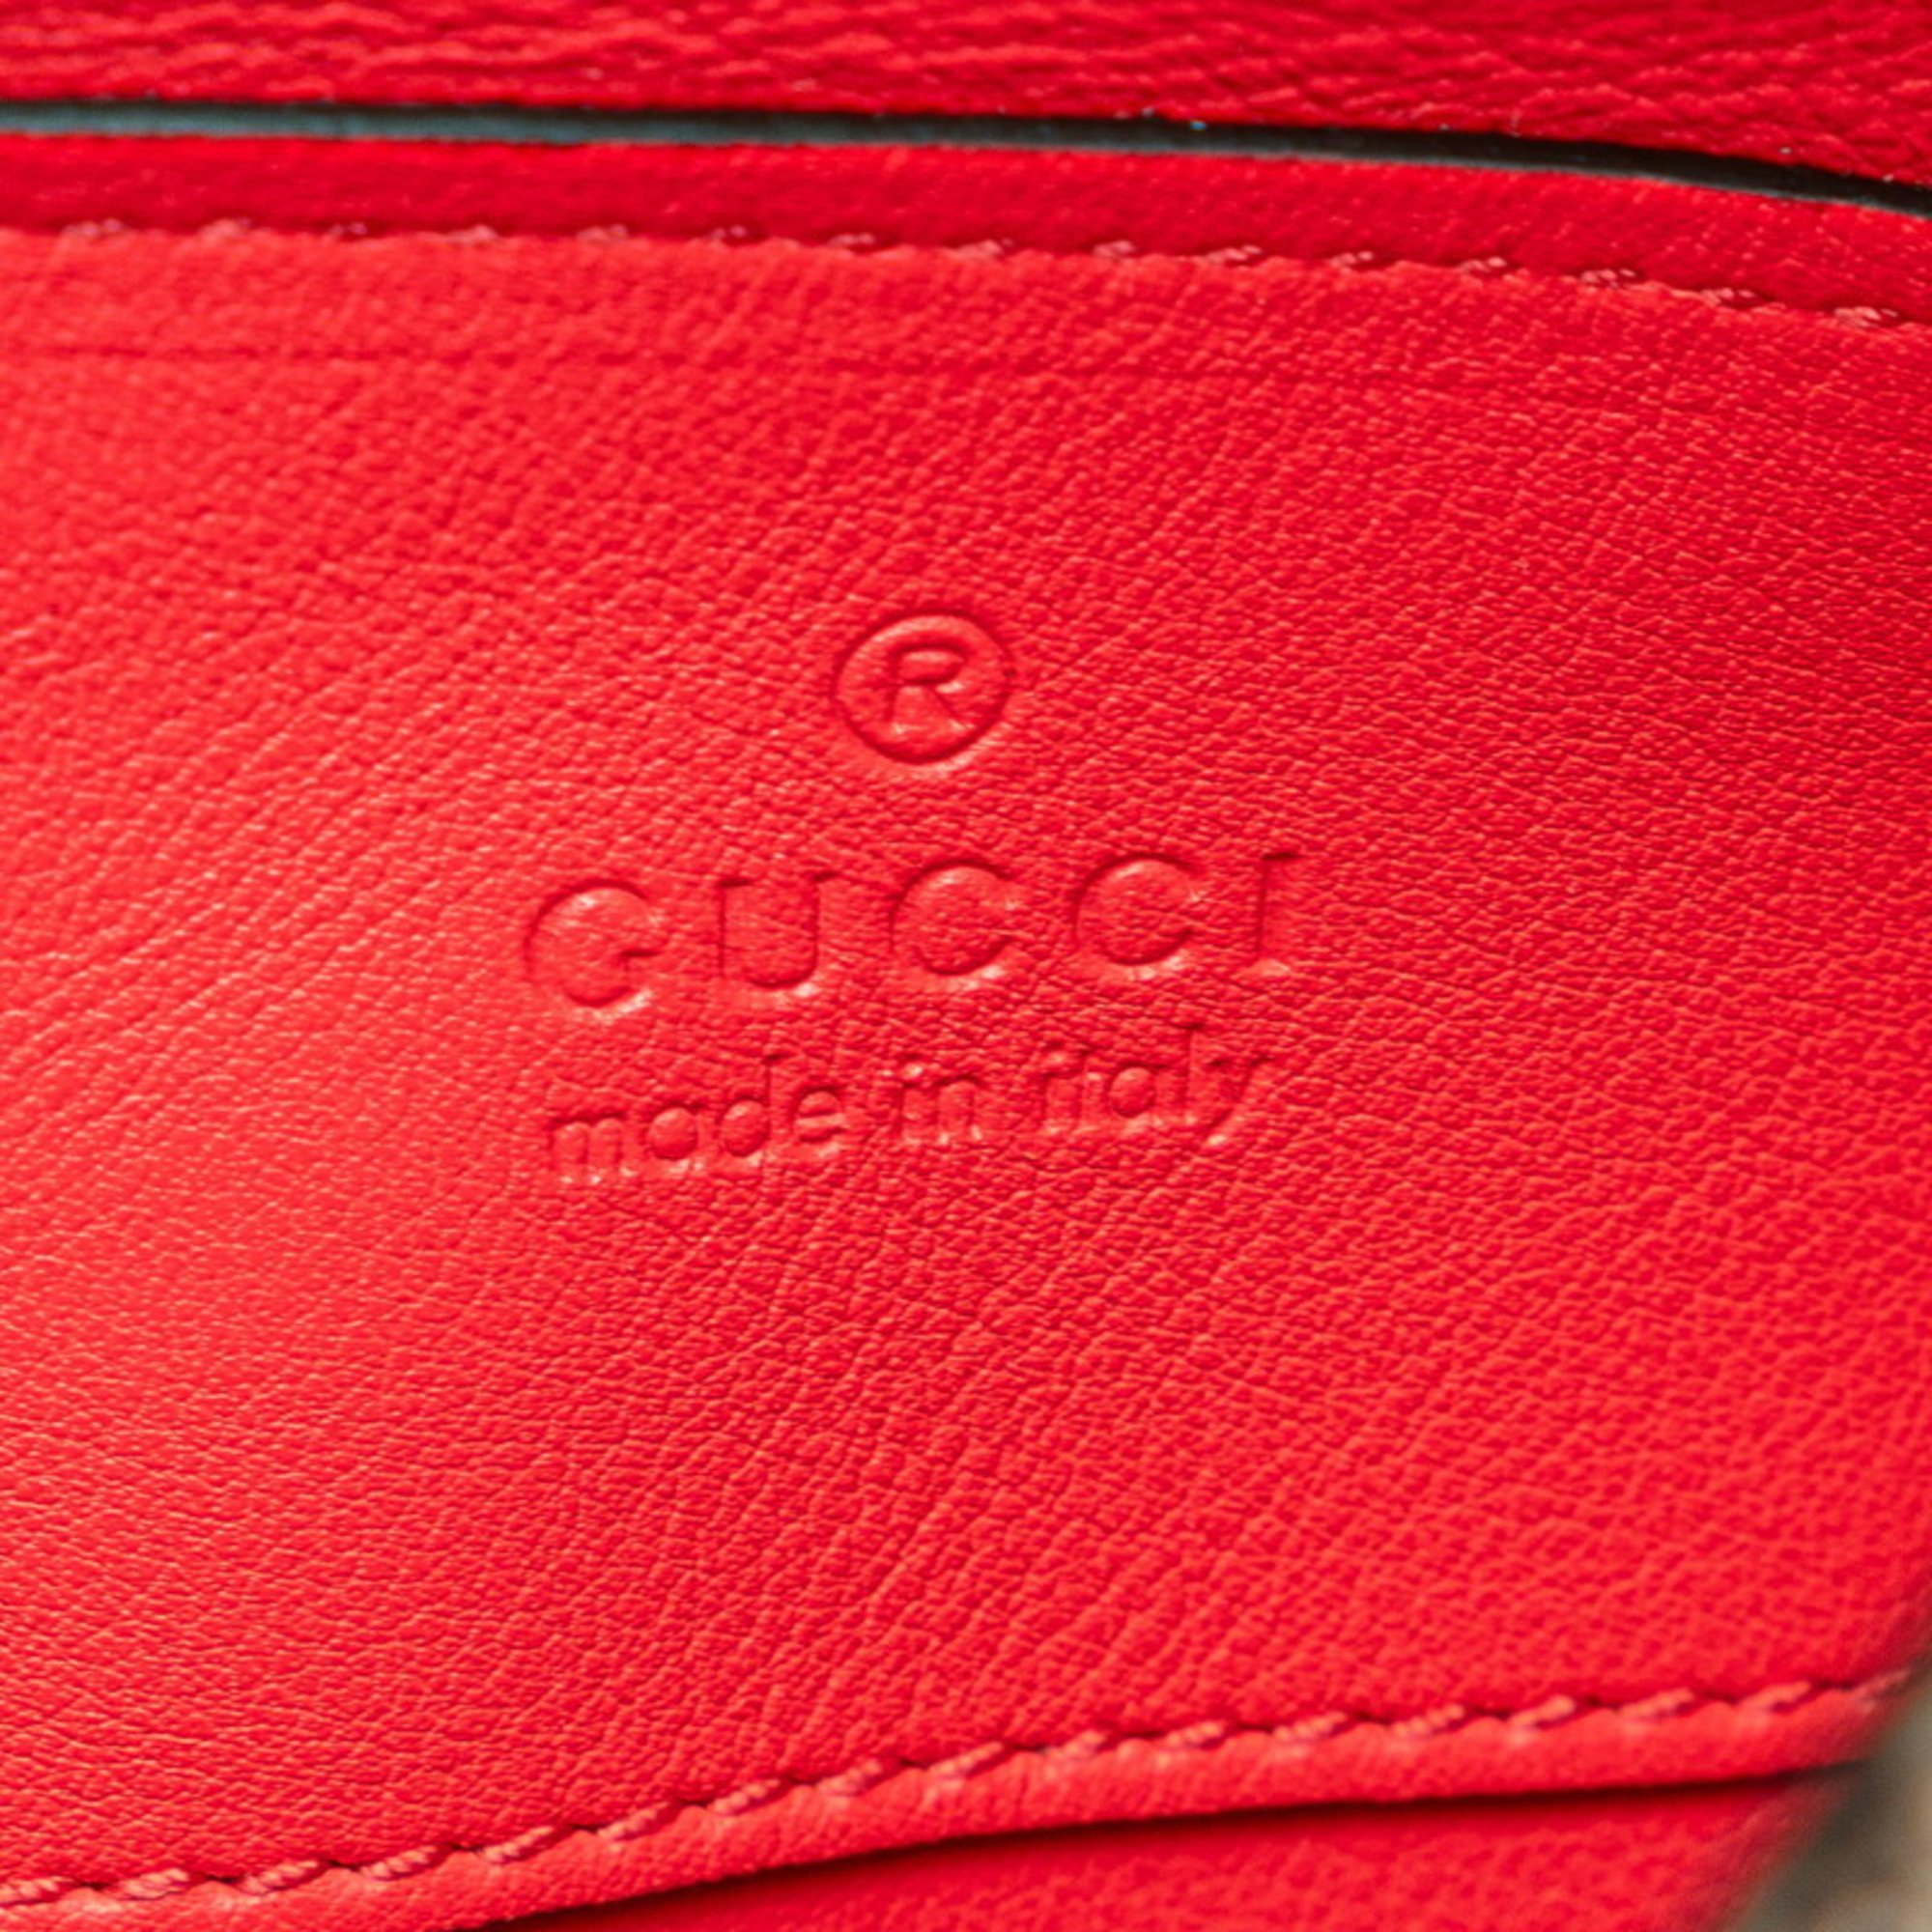 Gucci GG Supreme Small Heart LOVE Chain Shoulder Bag 678131 Beige Red PVC Leather Women's GUCCI